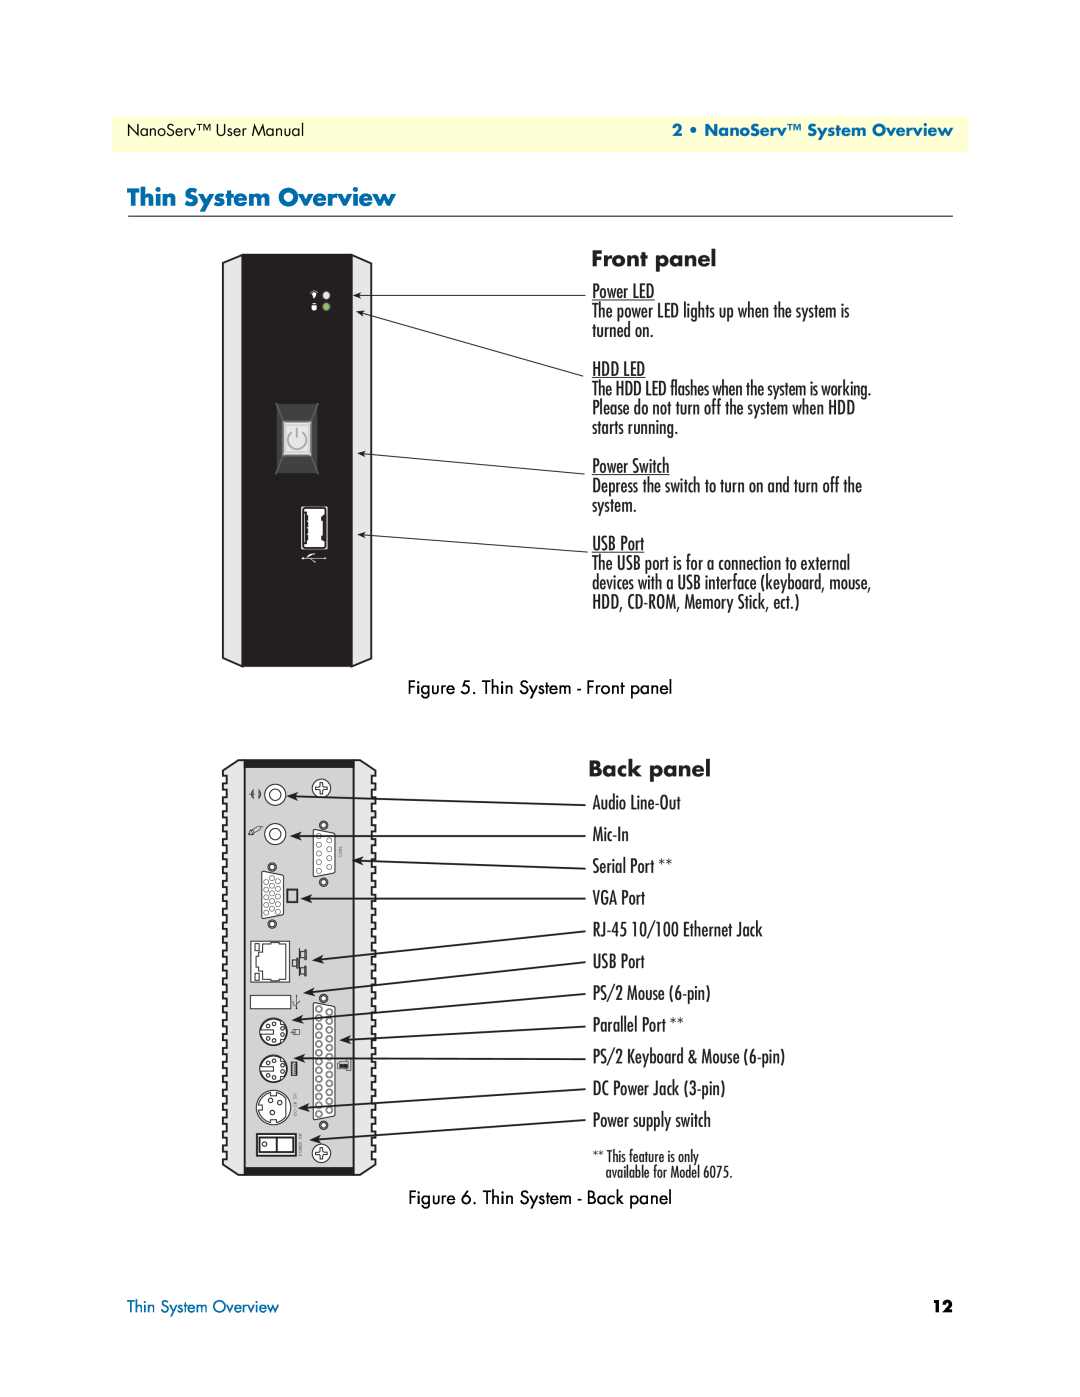 Patton electronic 07M6070-UM user manual Thin System Overview, Front panel, Back panel, RJ-45 10/100 Ethernet Jack USB Port 